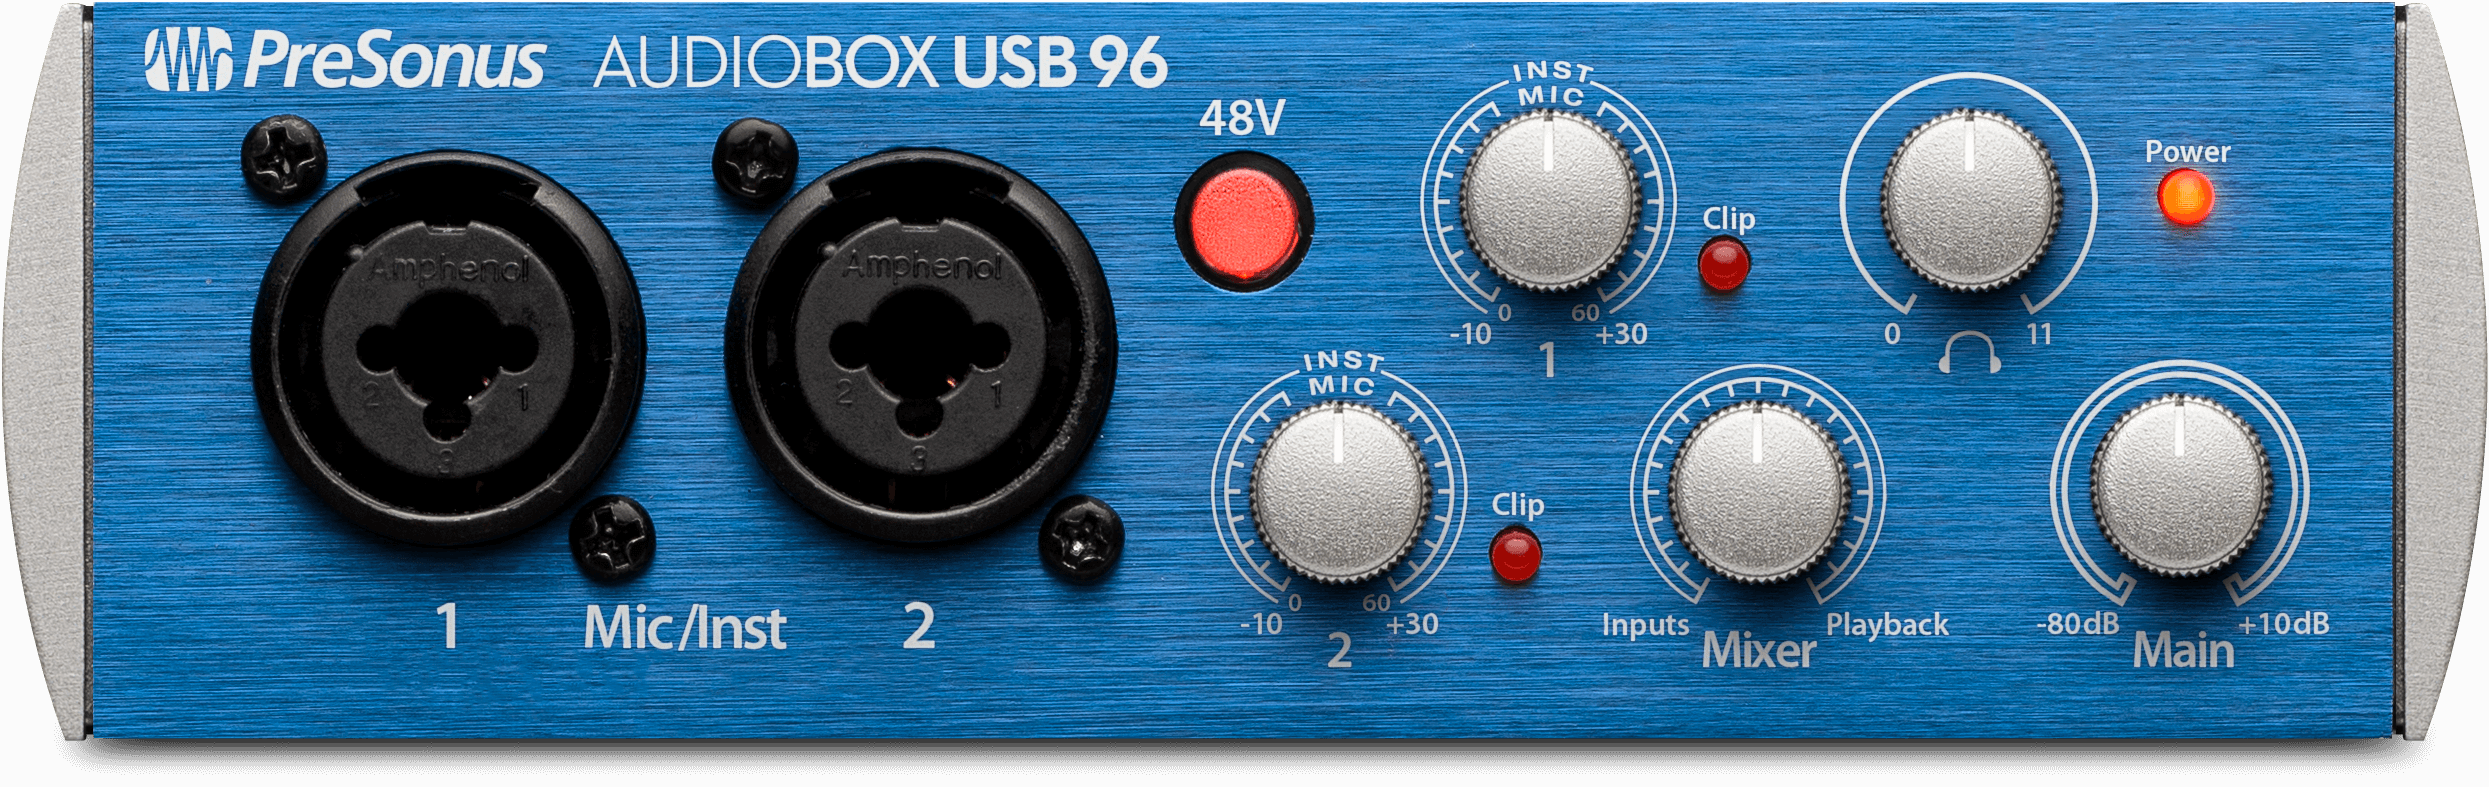 PreSonus Introduces AudioBox USB 96 and AudioBox 96 Studio Recording Kit |  Press Releases | PreSonus